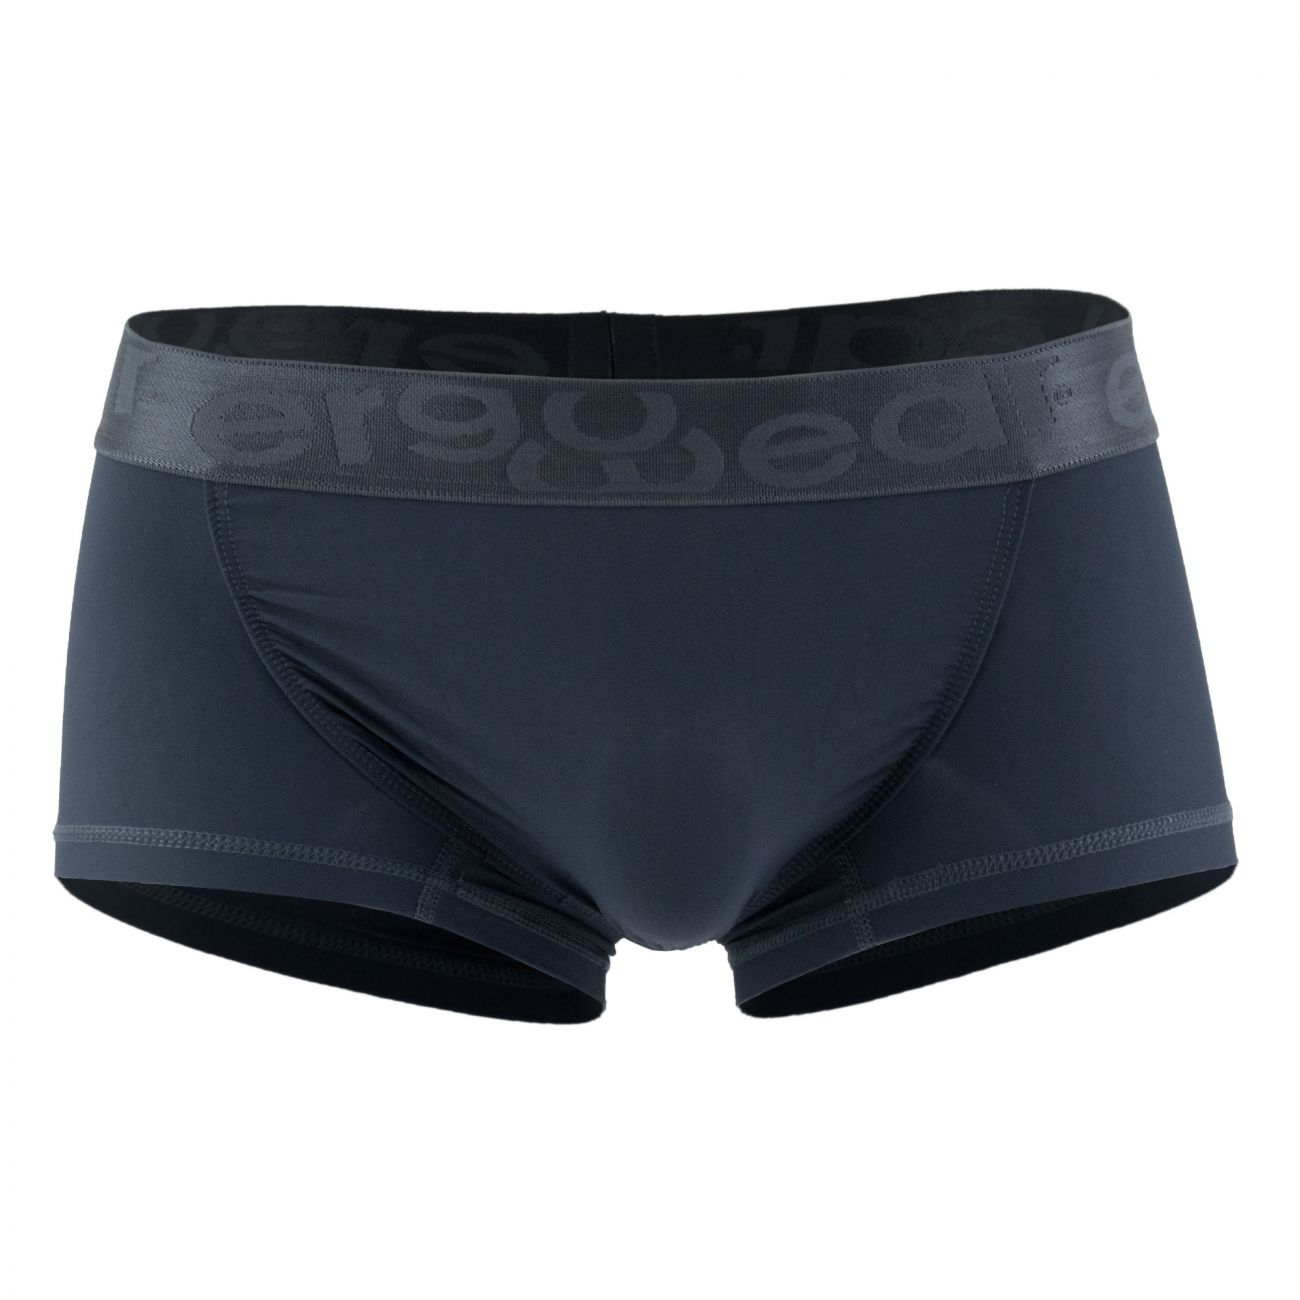 Mens Underwear: ErgoWear EW0629 FEEL XV Boxer Briefs | eBay